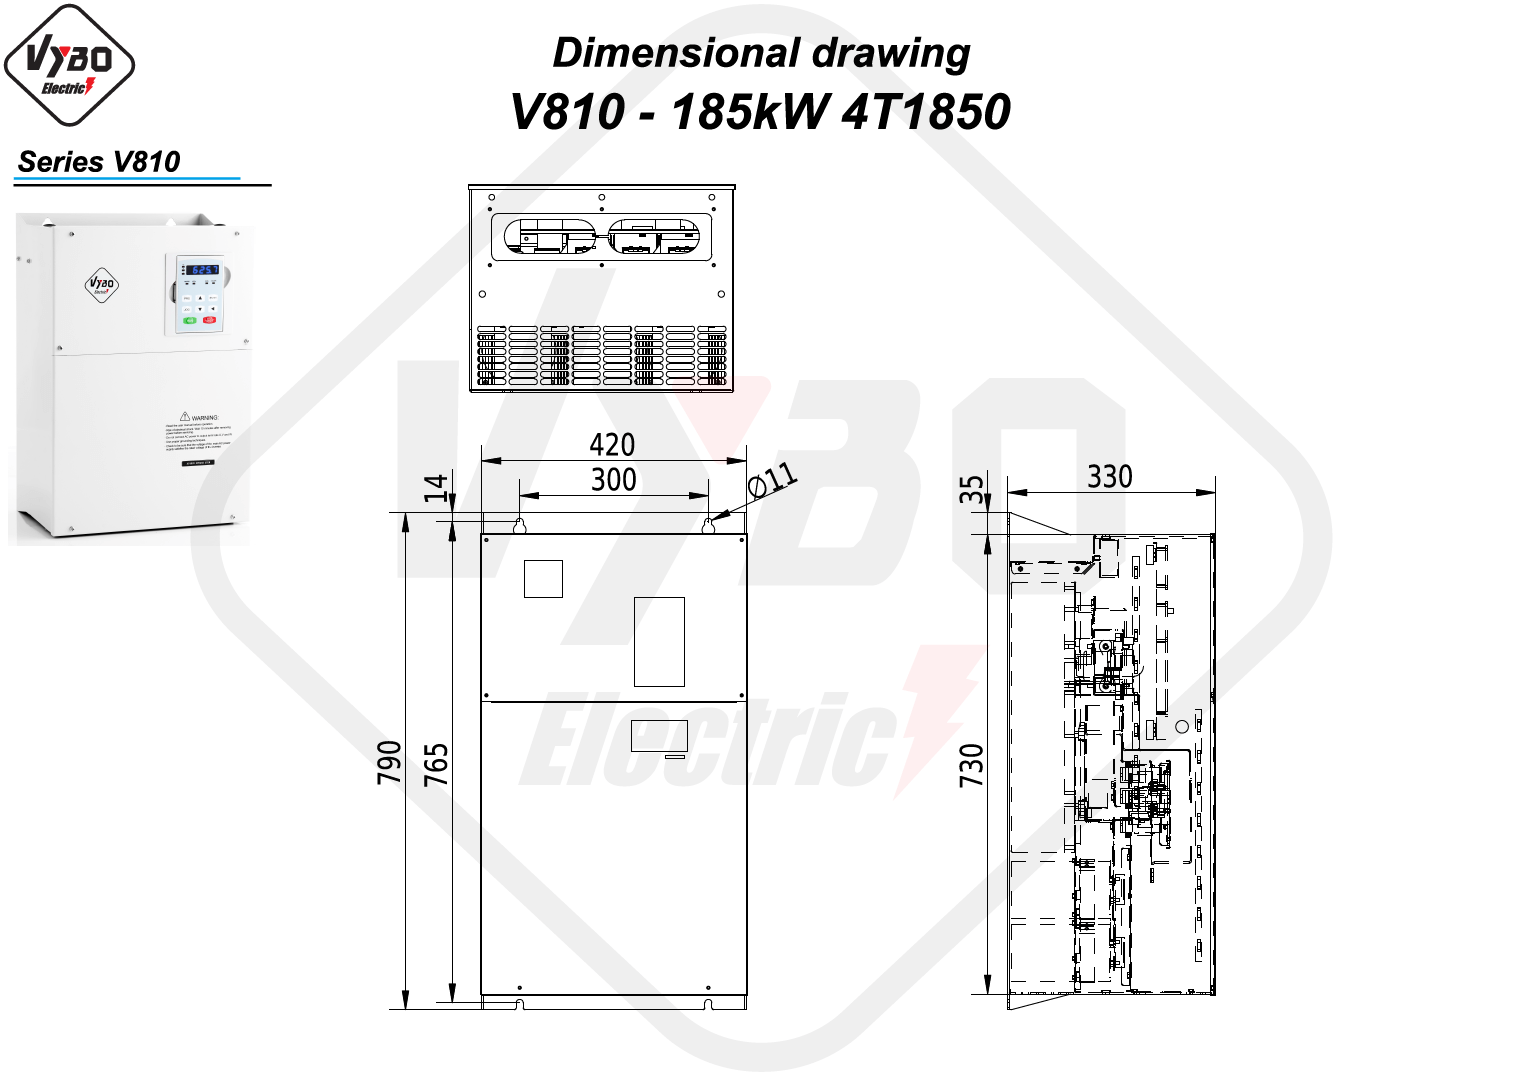 dimensional drawing V810 4T1850